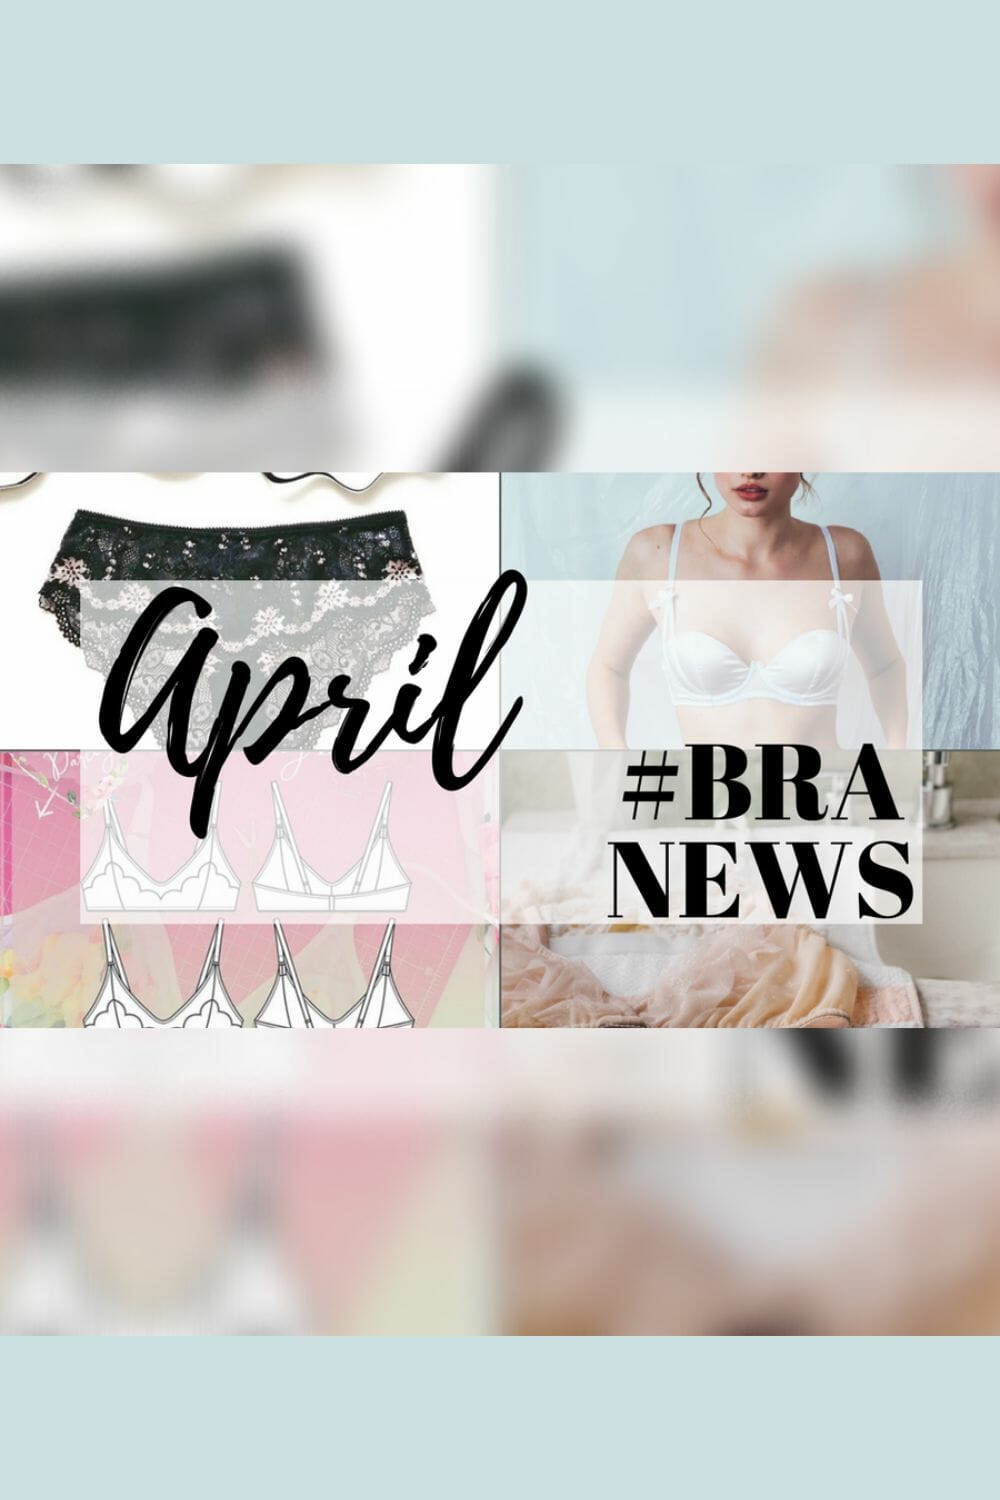 Bra News April & A Life Update